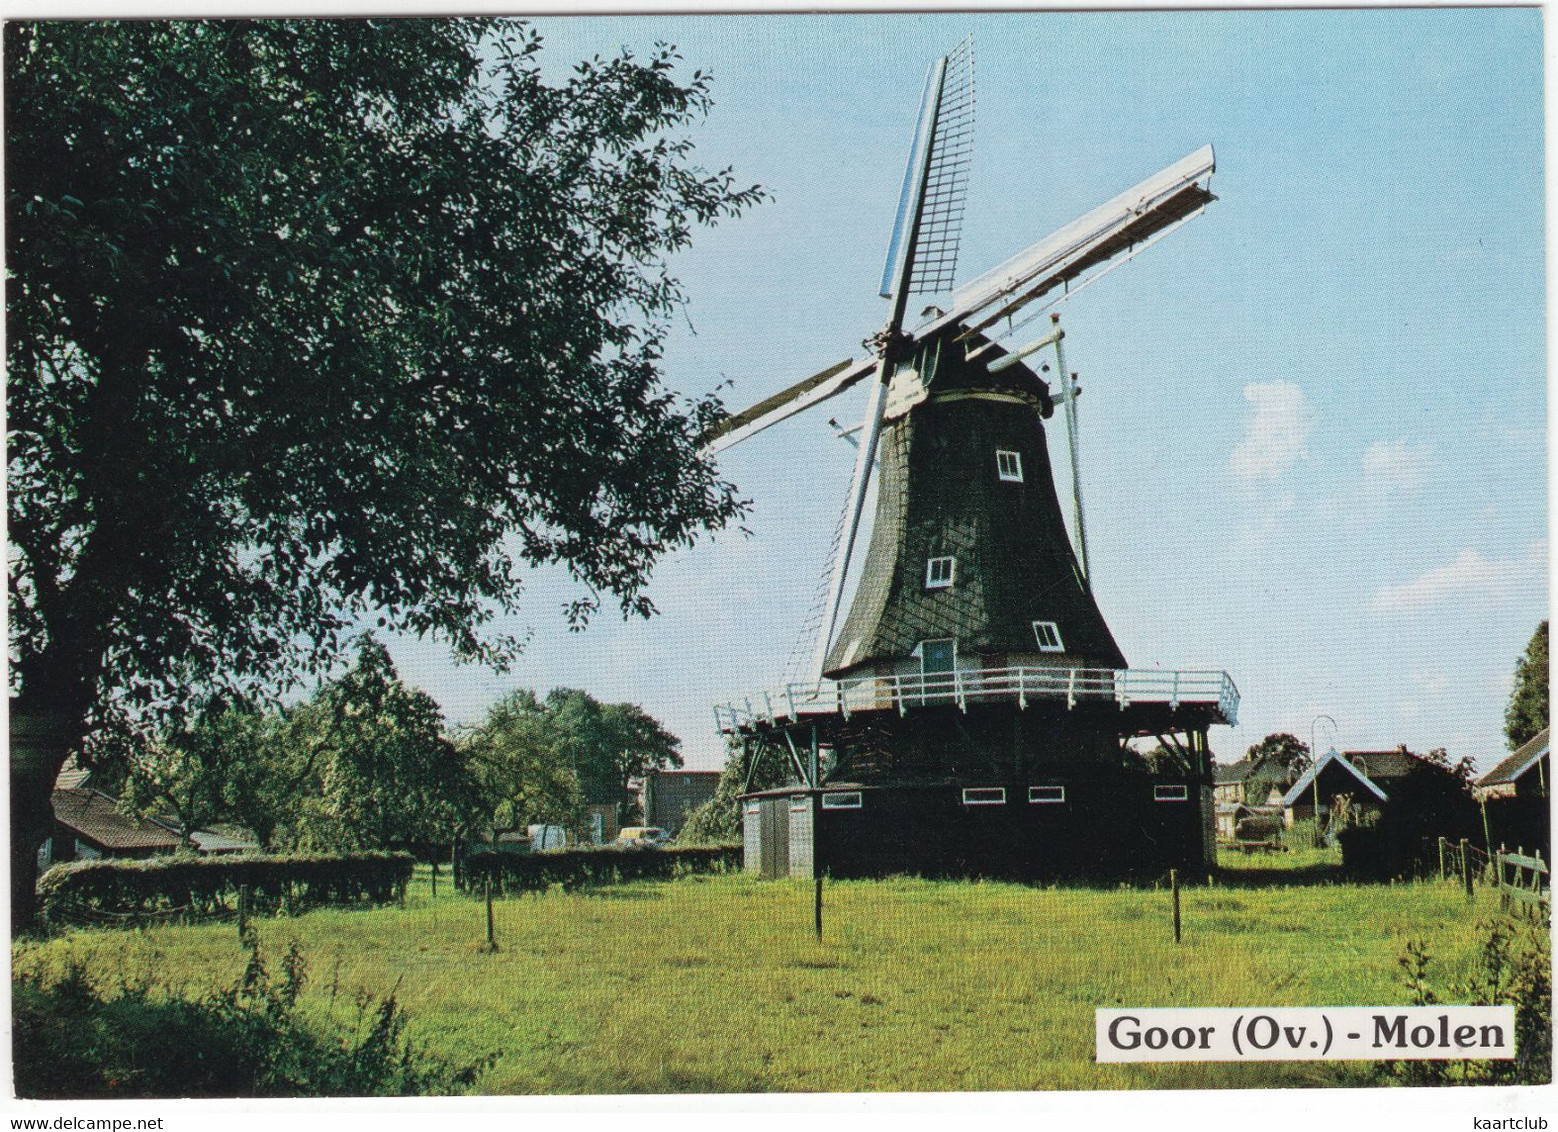 Goor (Ov.) - Molen 'De Braakmolen' - (Holland) - (Moulin à Vent, Mühle, Windmill, Windmolen) - Goor